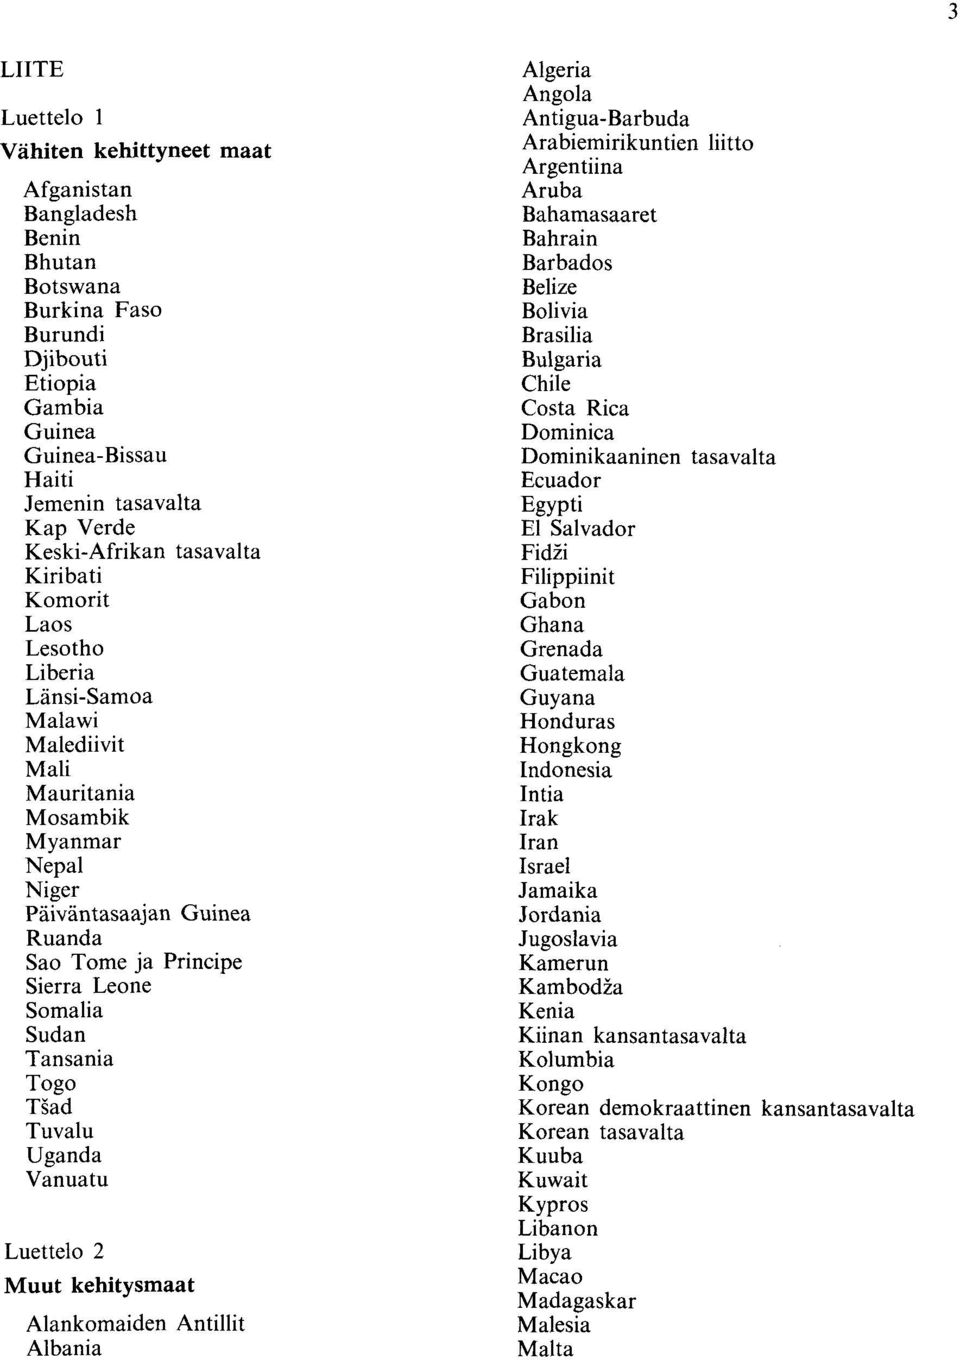 Tansania Togo TSad Tuvalu Uganda Vanuatu Luettelo 2 Muut kehitysmaat Alankomaiden Antillit Albania Algeria Angola Antigua-Barbuda Arabiemirikuntien liitto Argentiina Aruba Bahamasaaret Bahrain